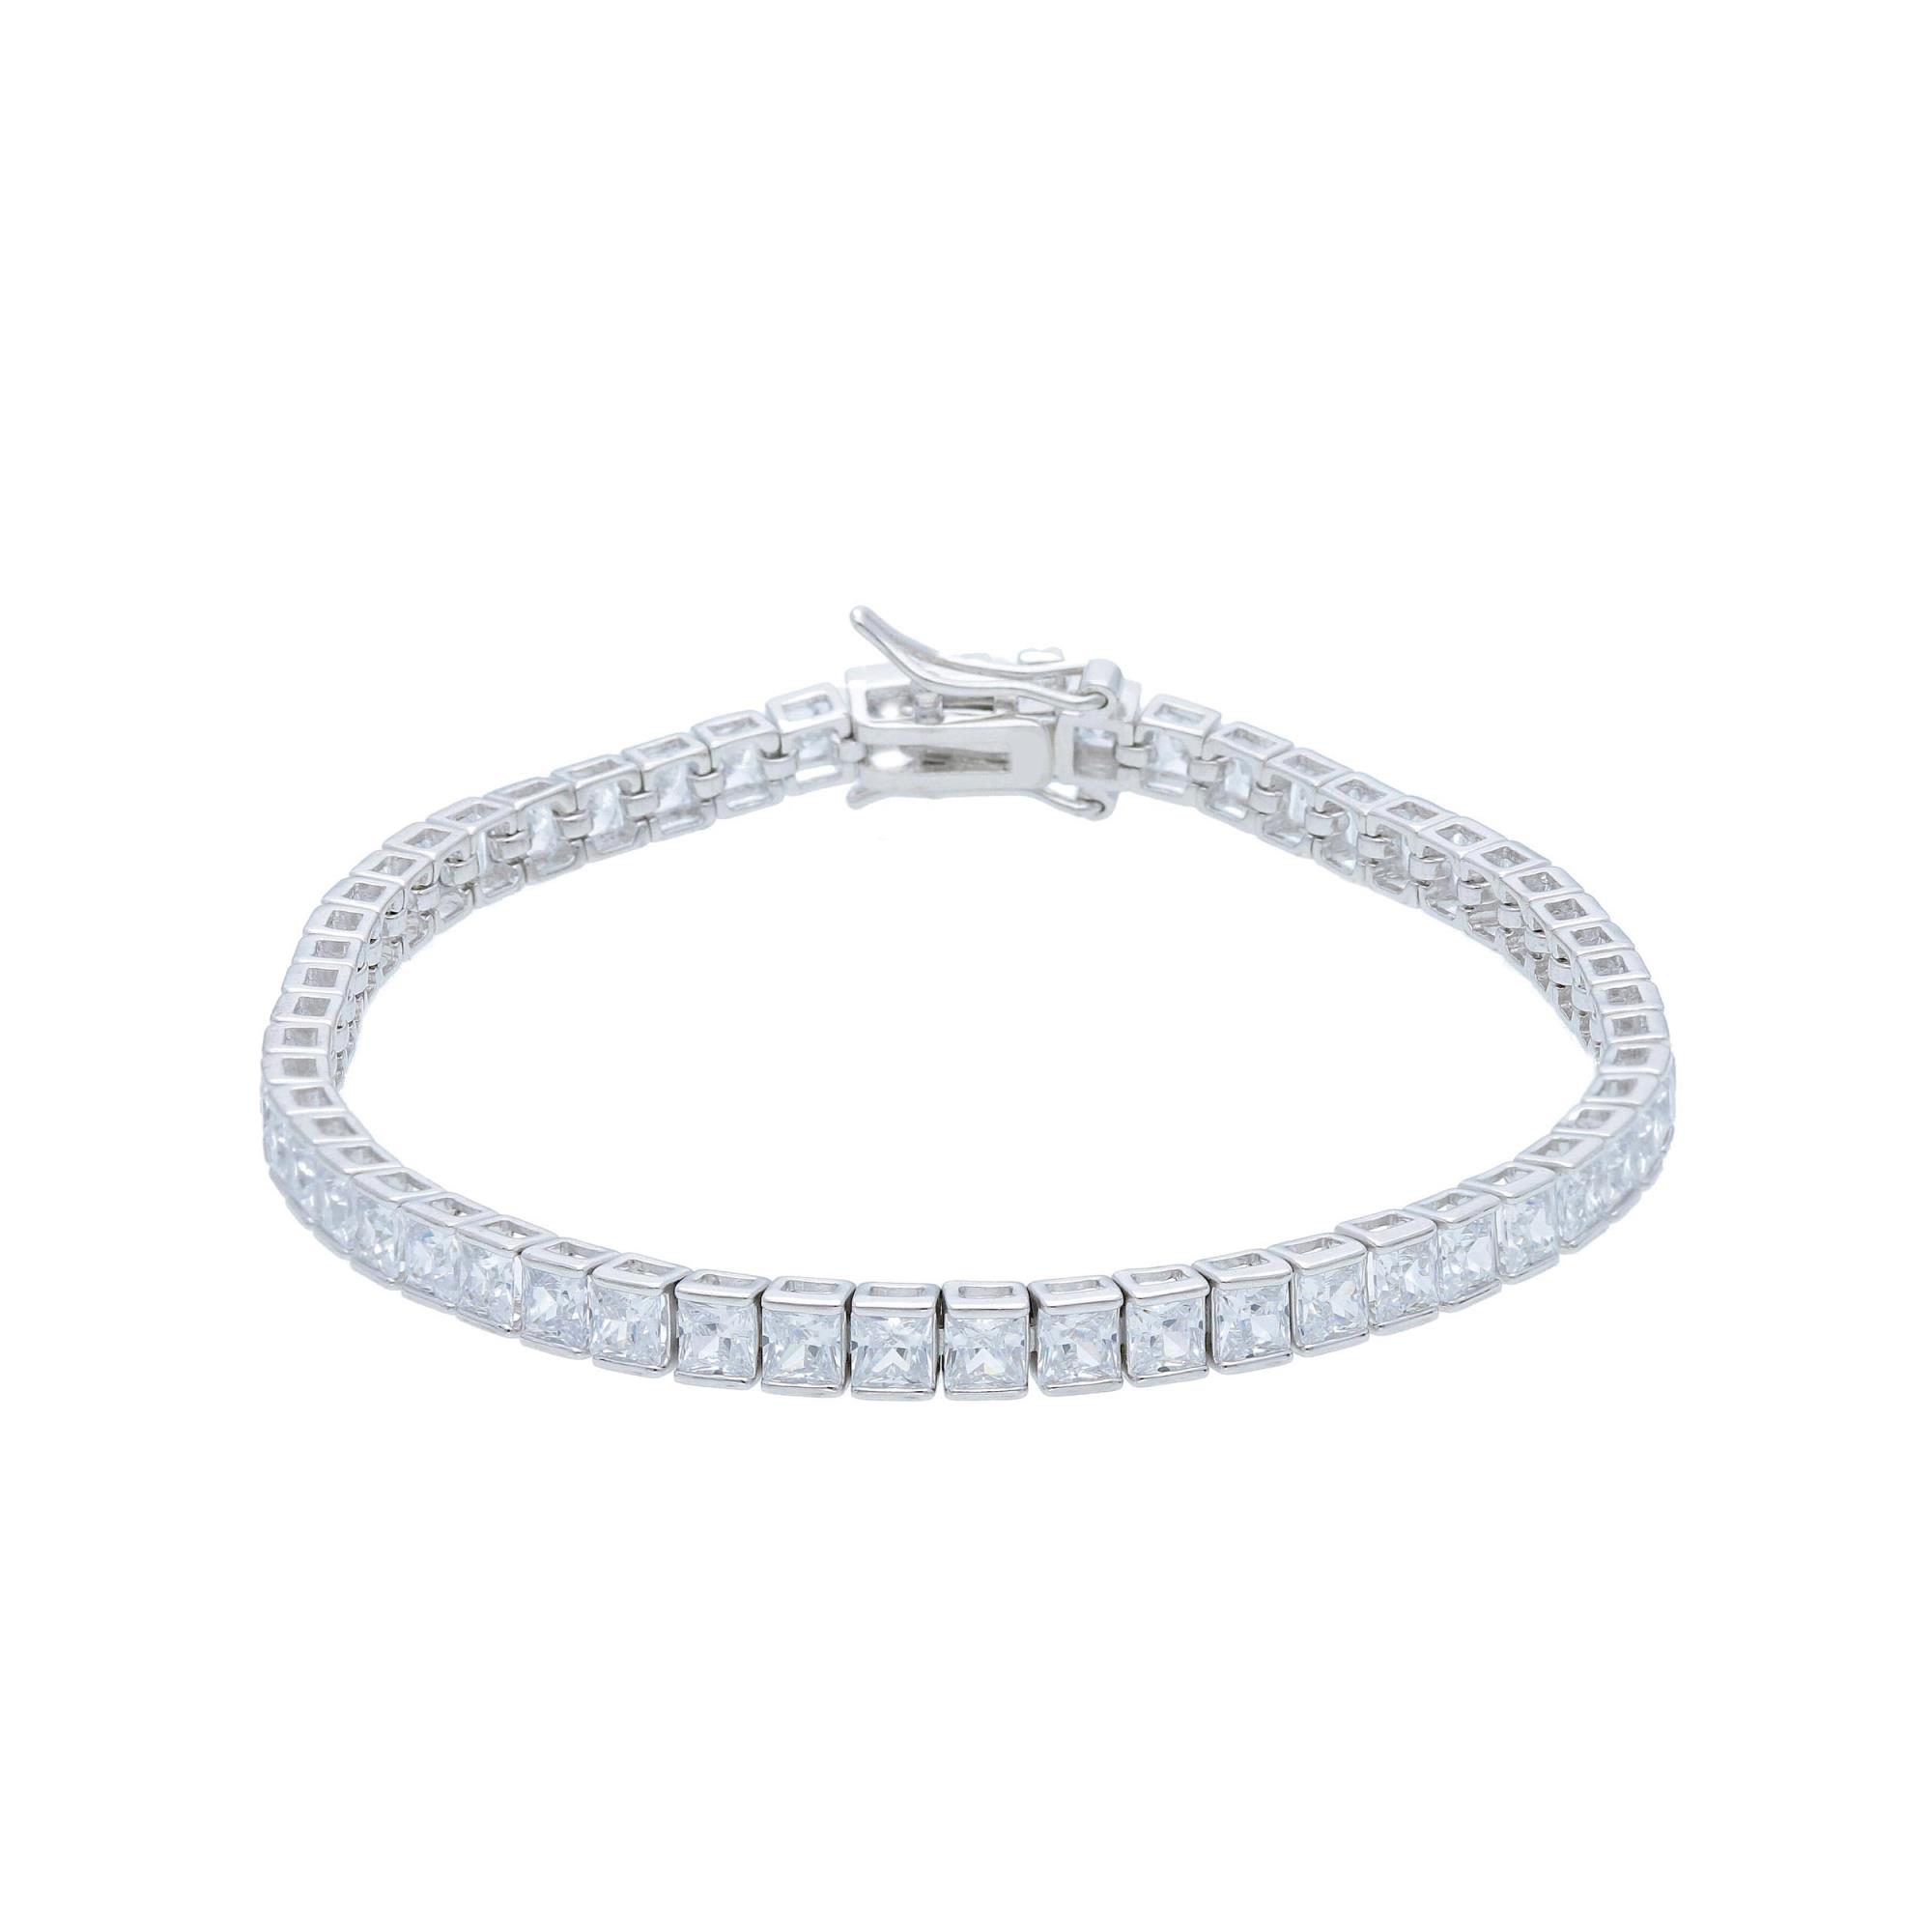 Silver tennis bracelet with zircons - ORO&CO 925